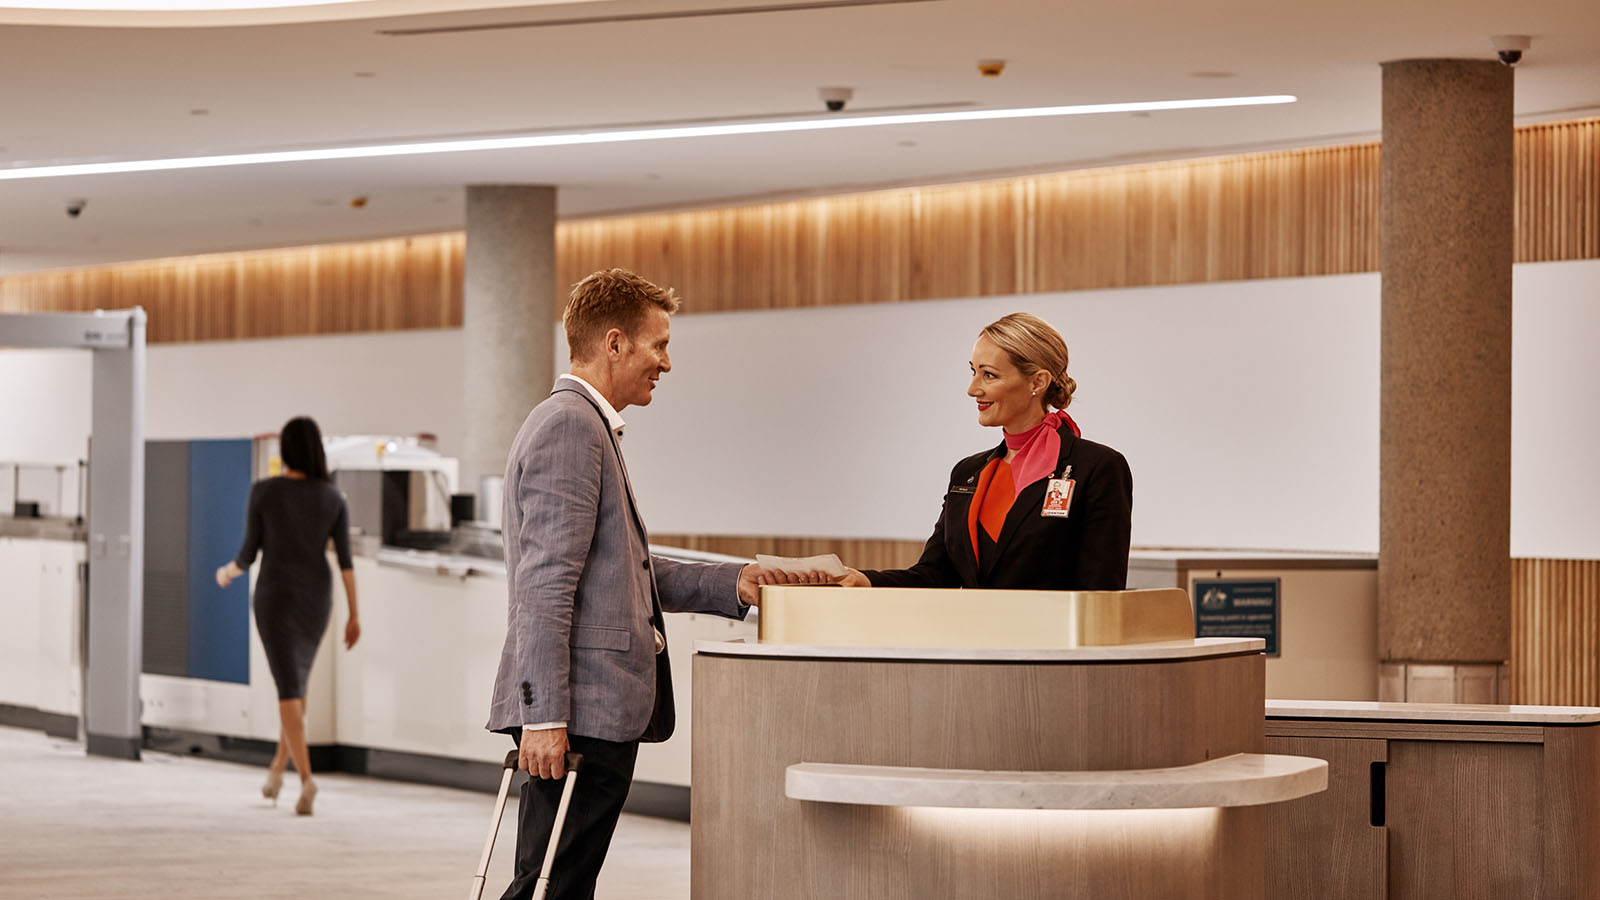 Qantas Domestic Business Lounge Brisbane